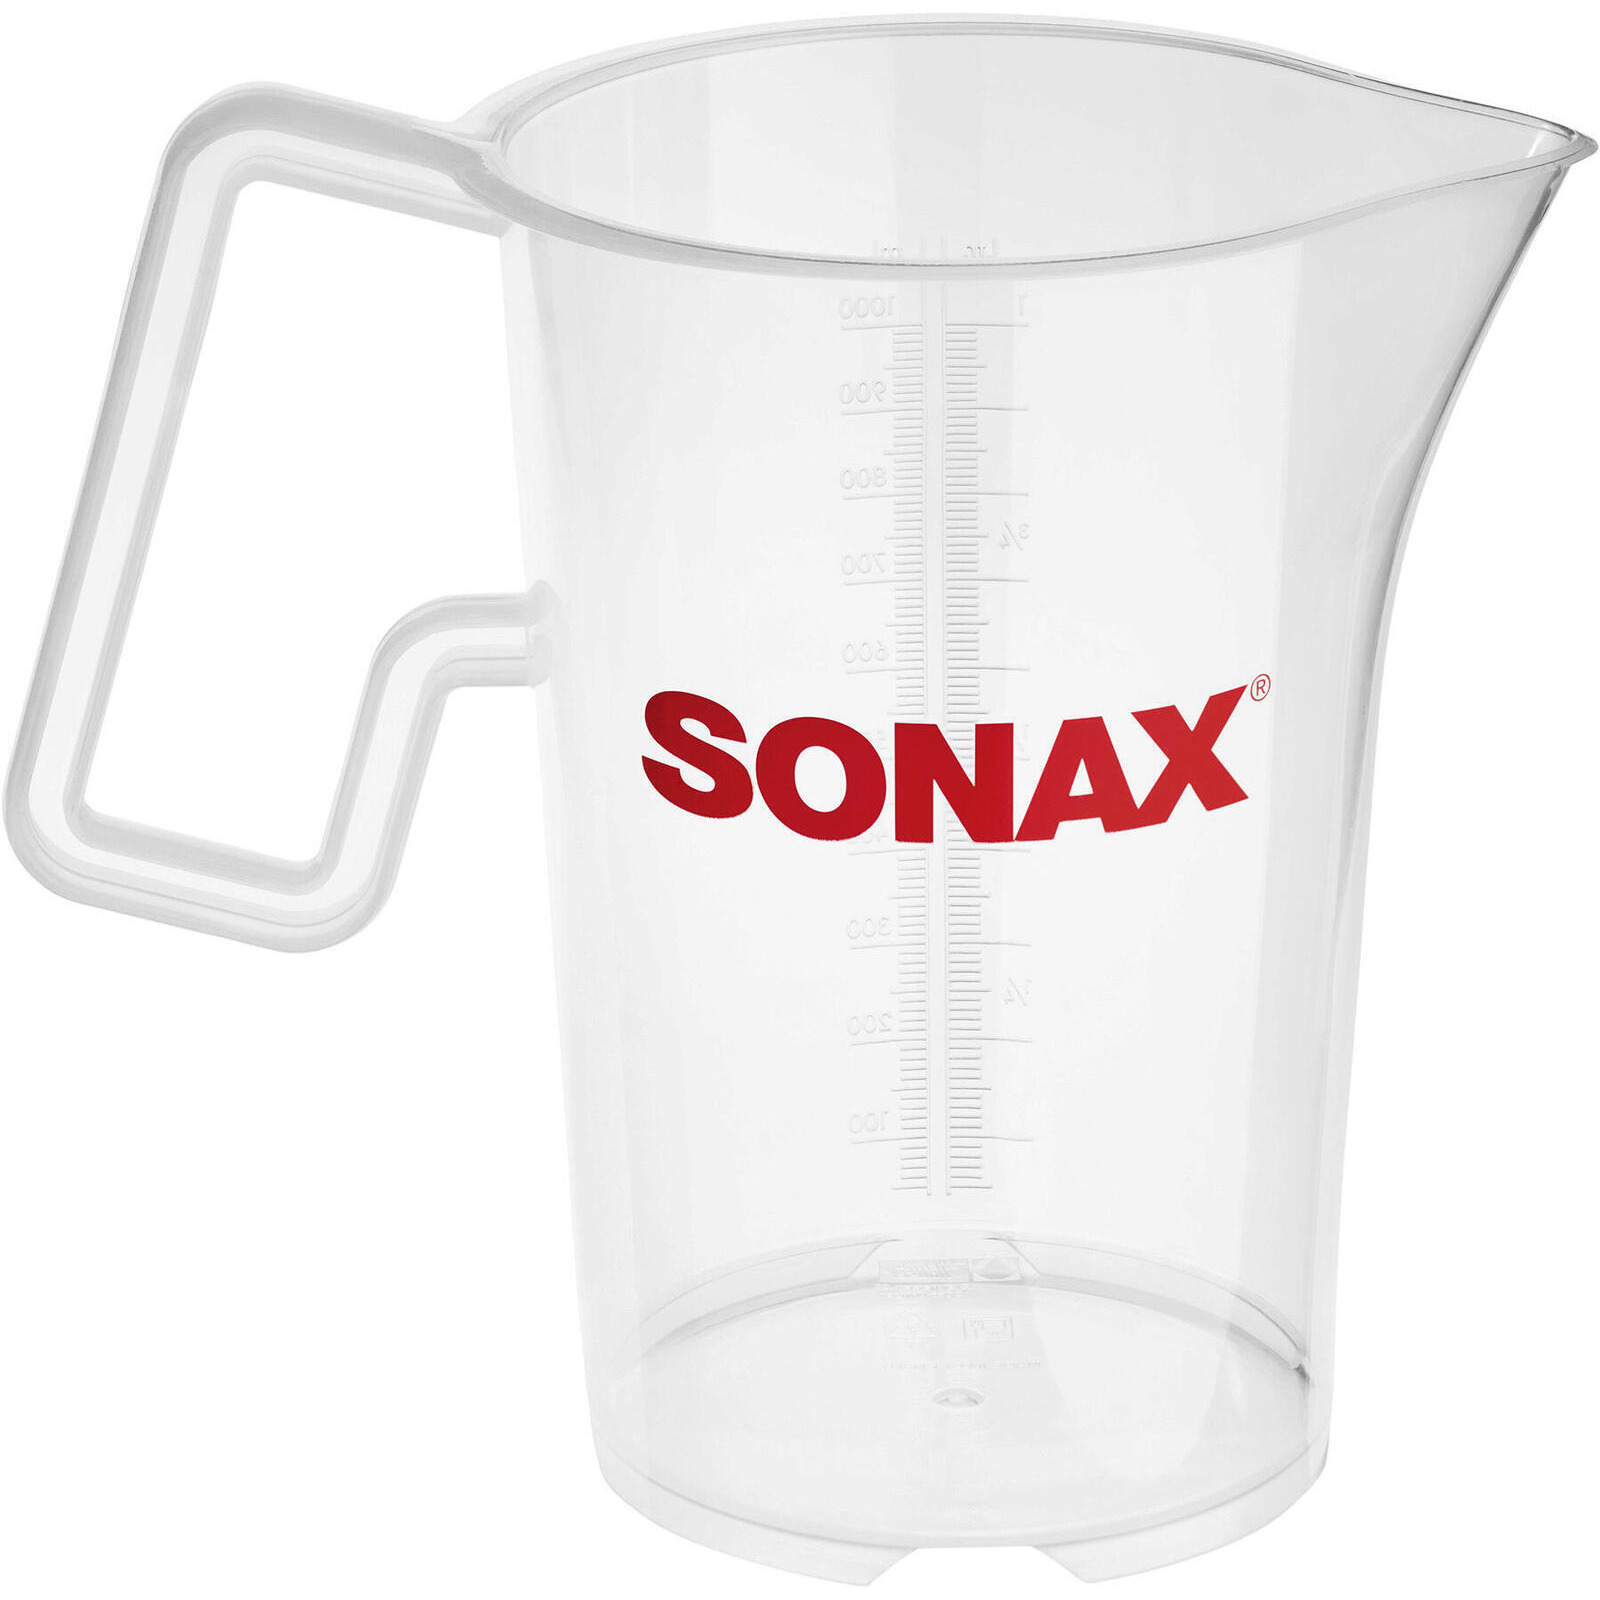 SONAX Messbecher Messbecher 1 Liter